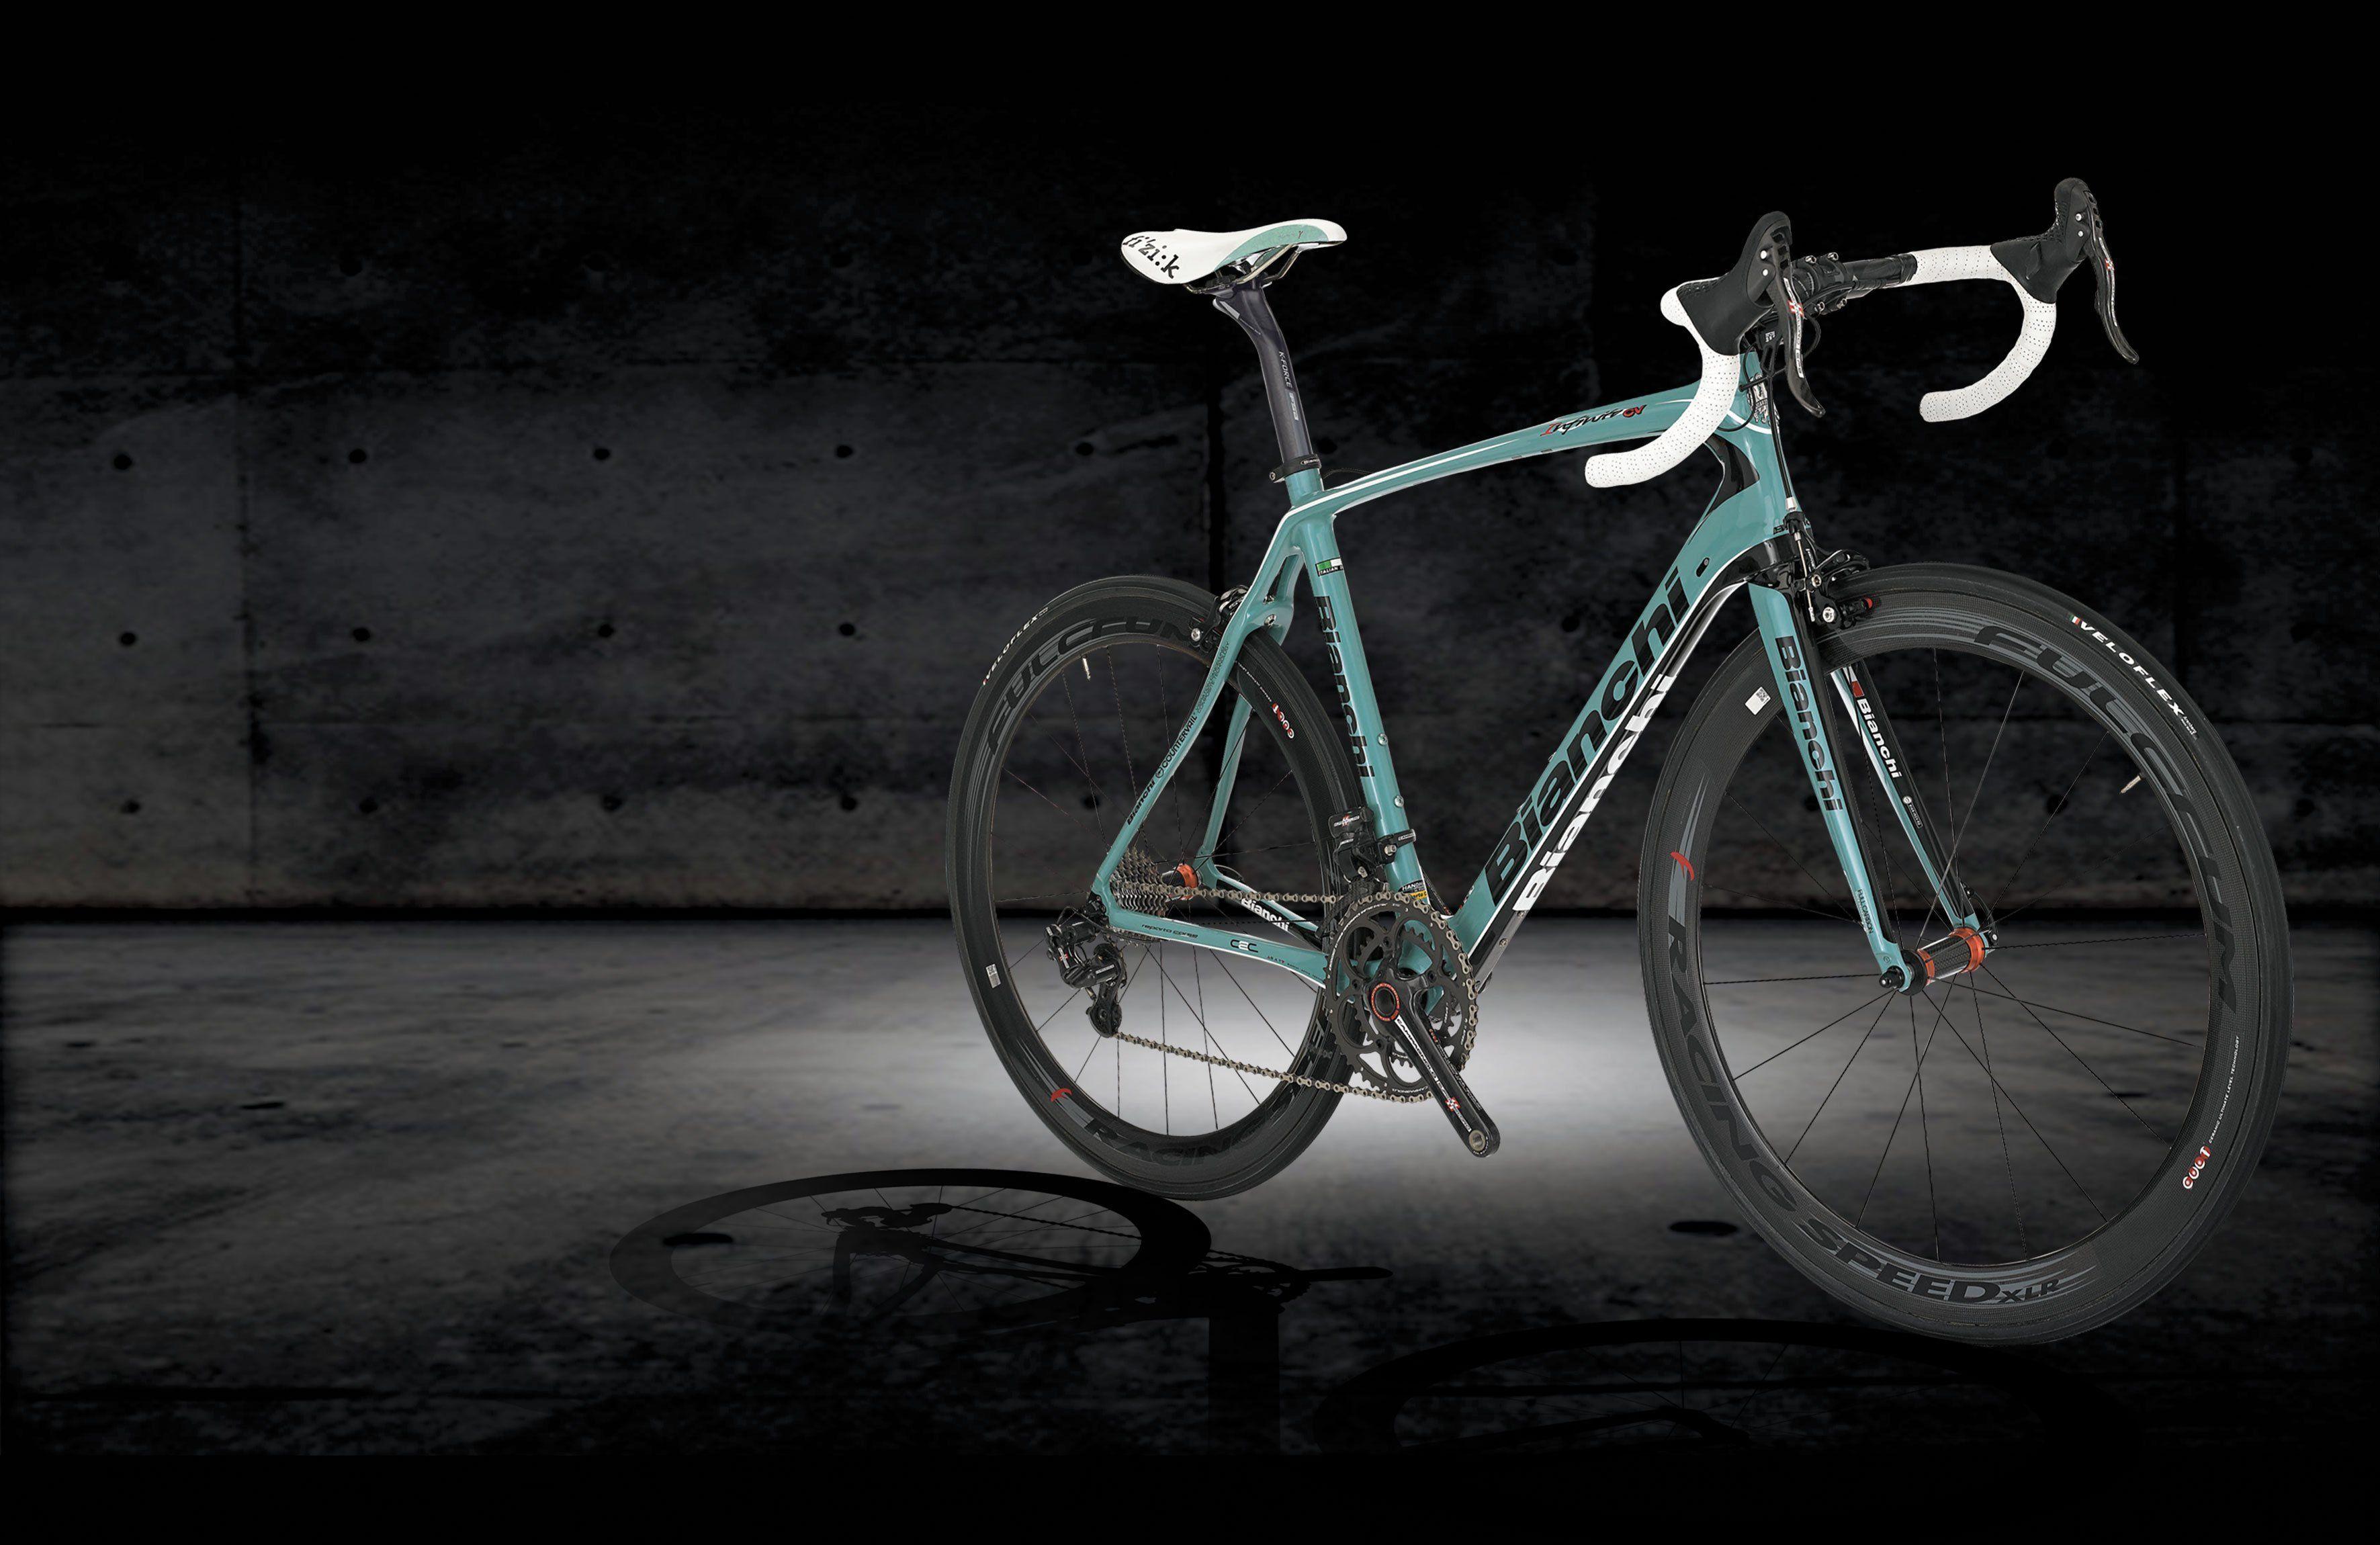 Bianchi Bicycle Bike Wallpaper 543×300 Pixels. BIANCHI